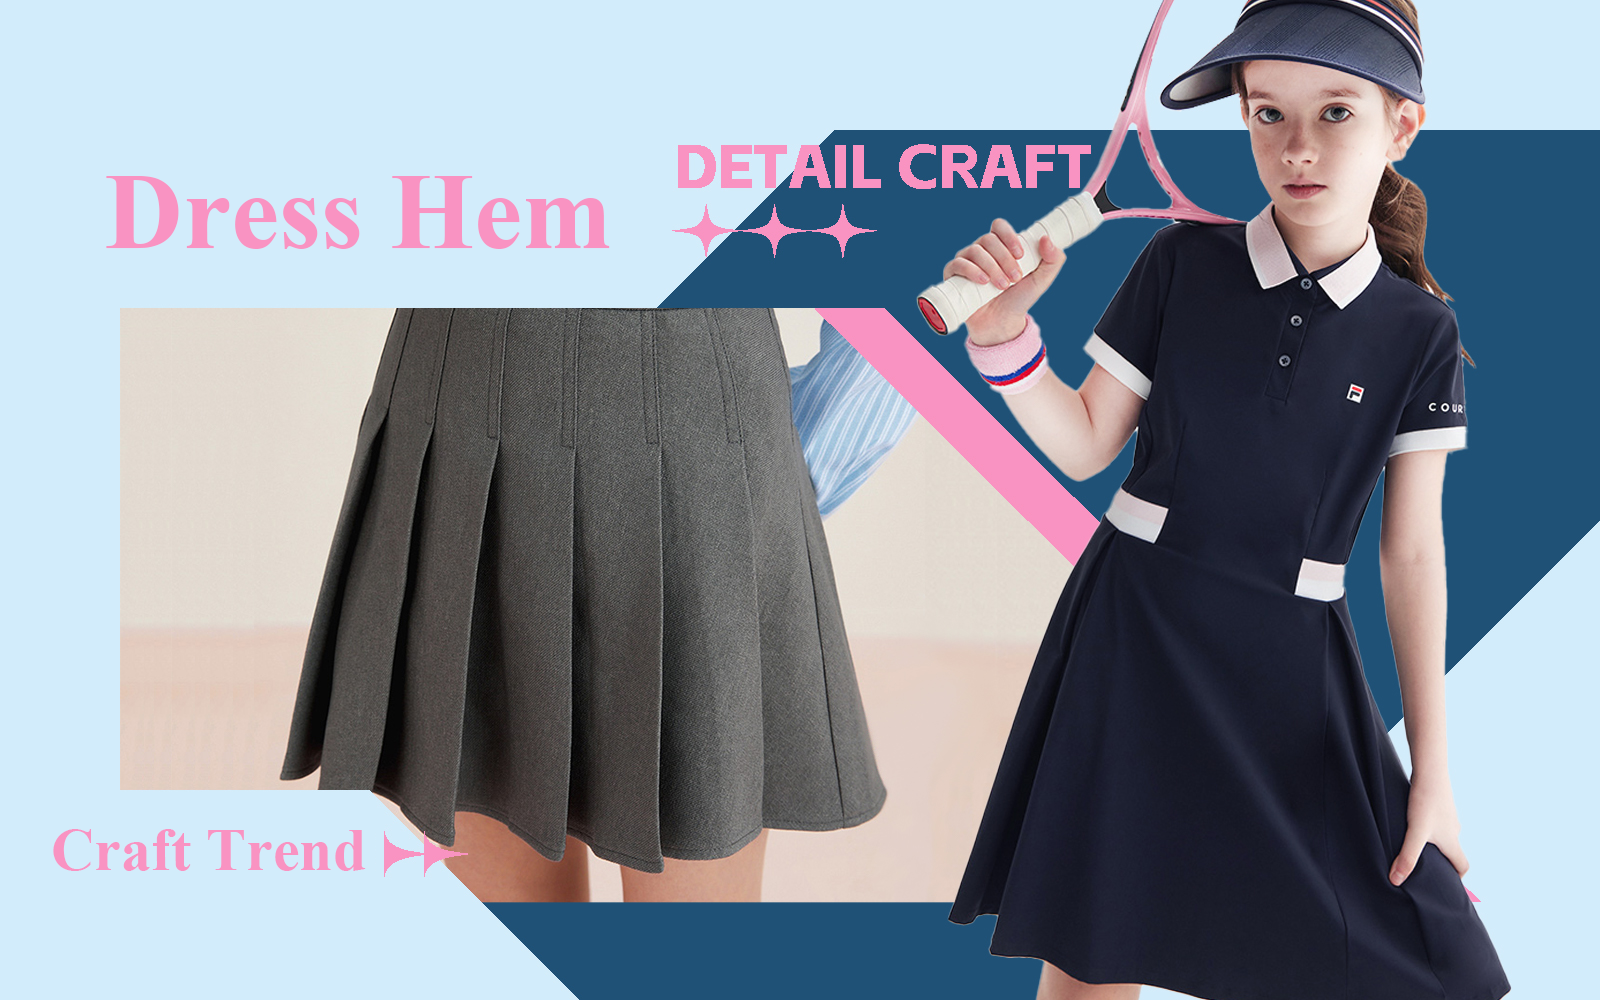 Rhythmical Pleats -- The Detail & Craft Trend for Girls' Dress Hem